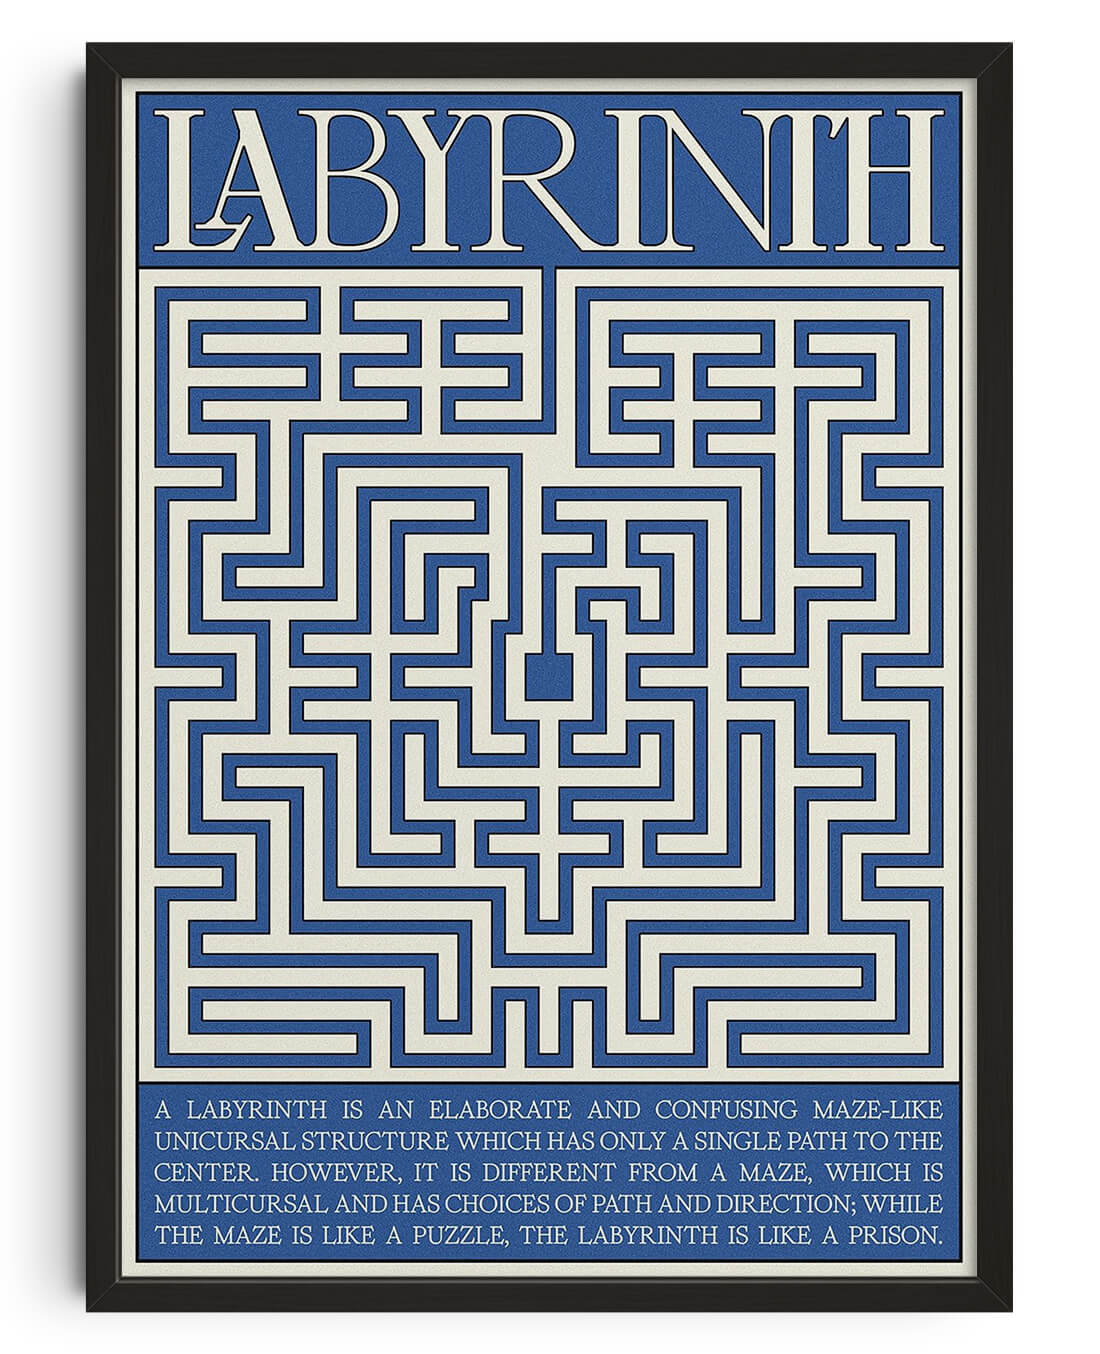 Labyrinth contemporary wall art print by Utsav Verma - sold by DROOL